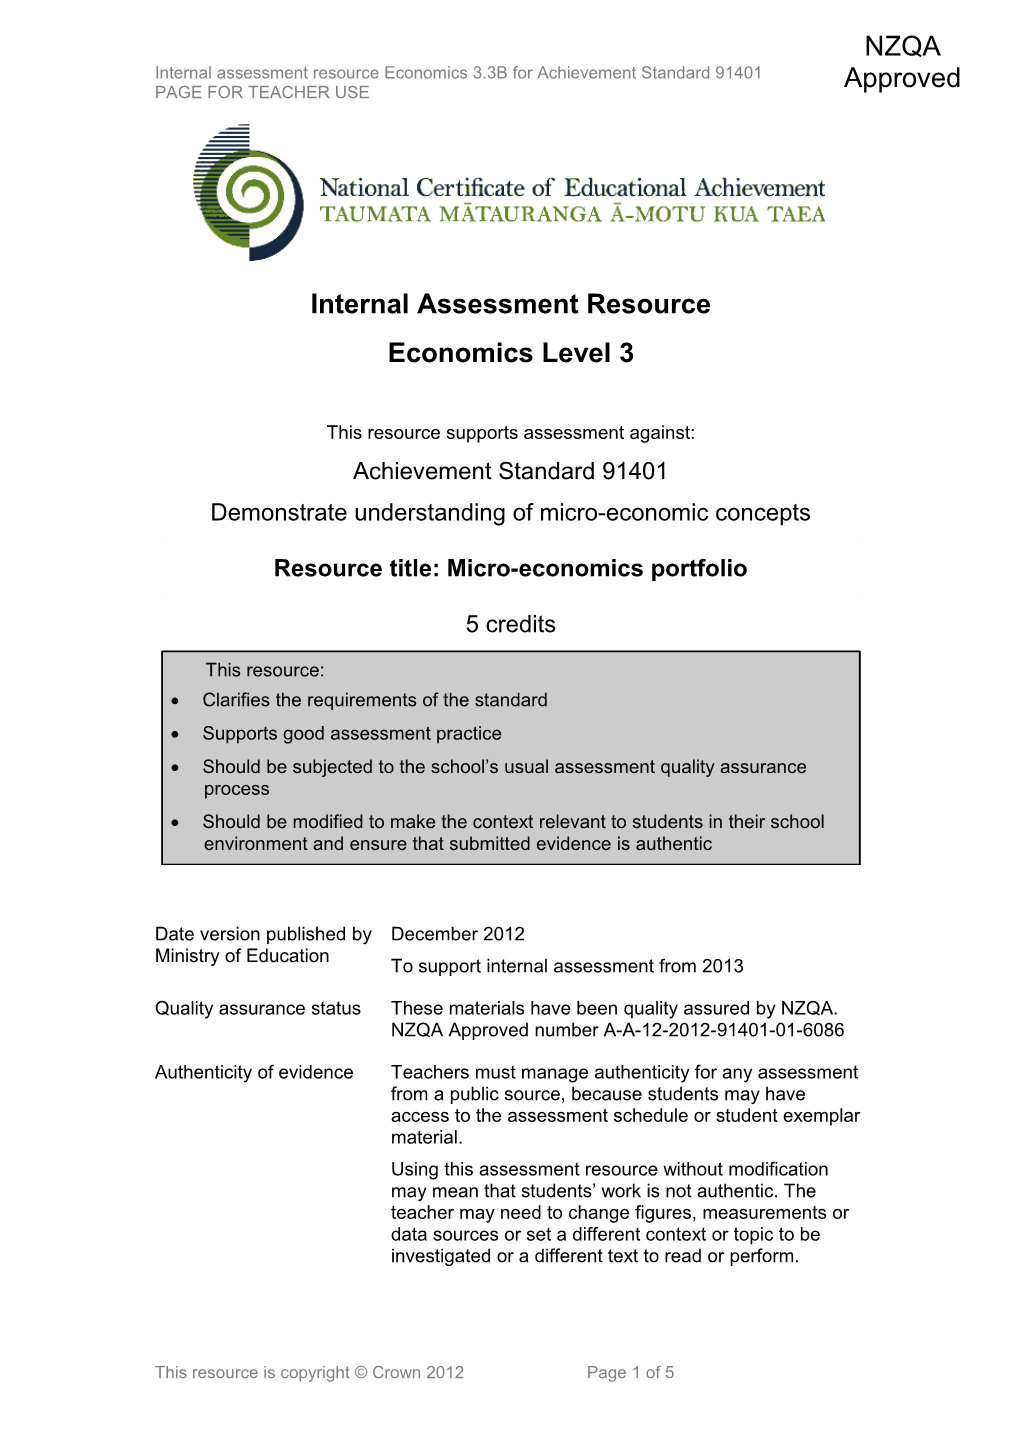 Level 3 Economics Internal Assessment Resource